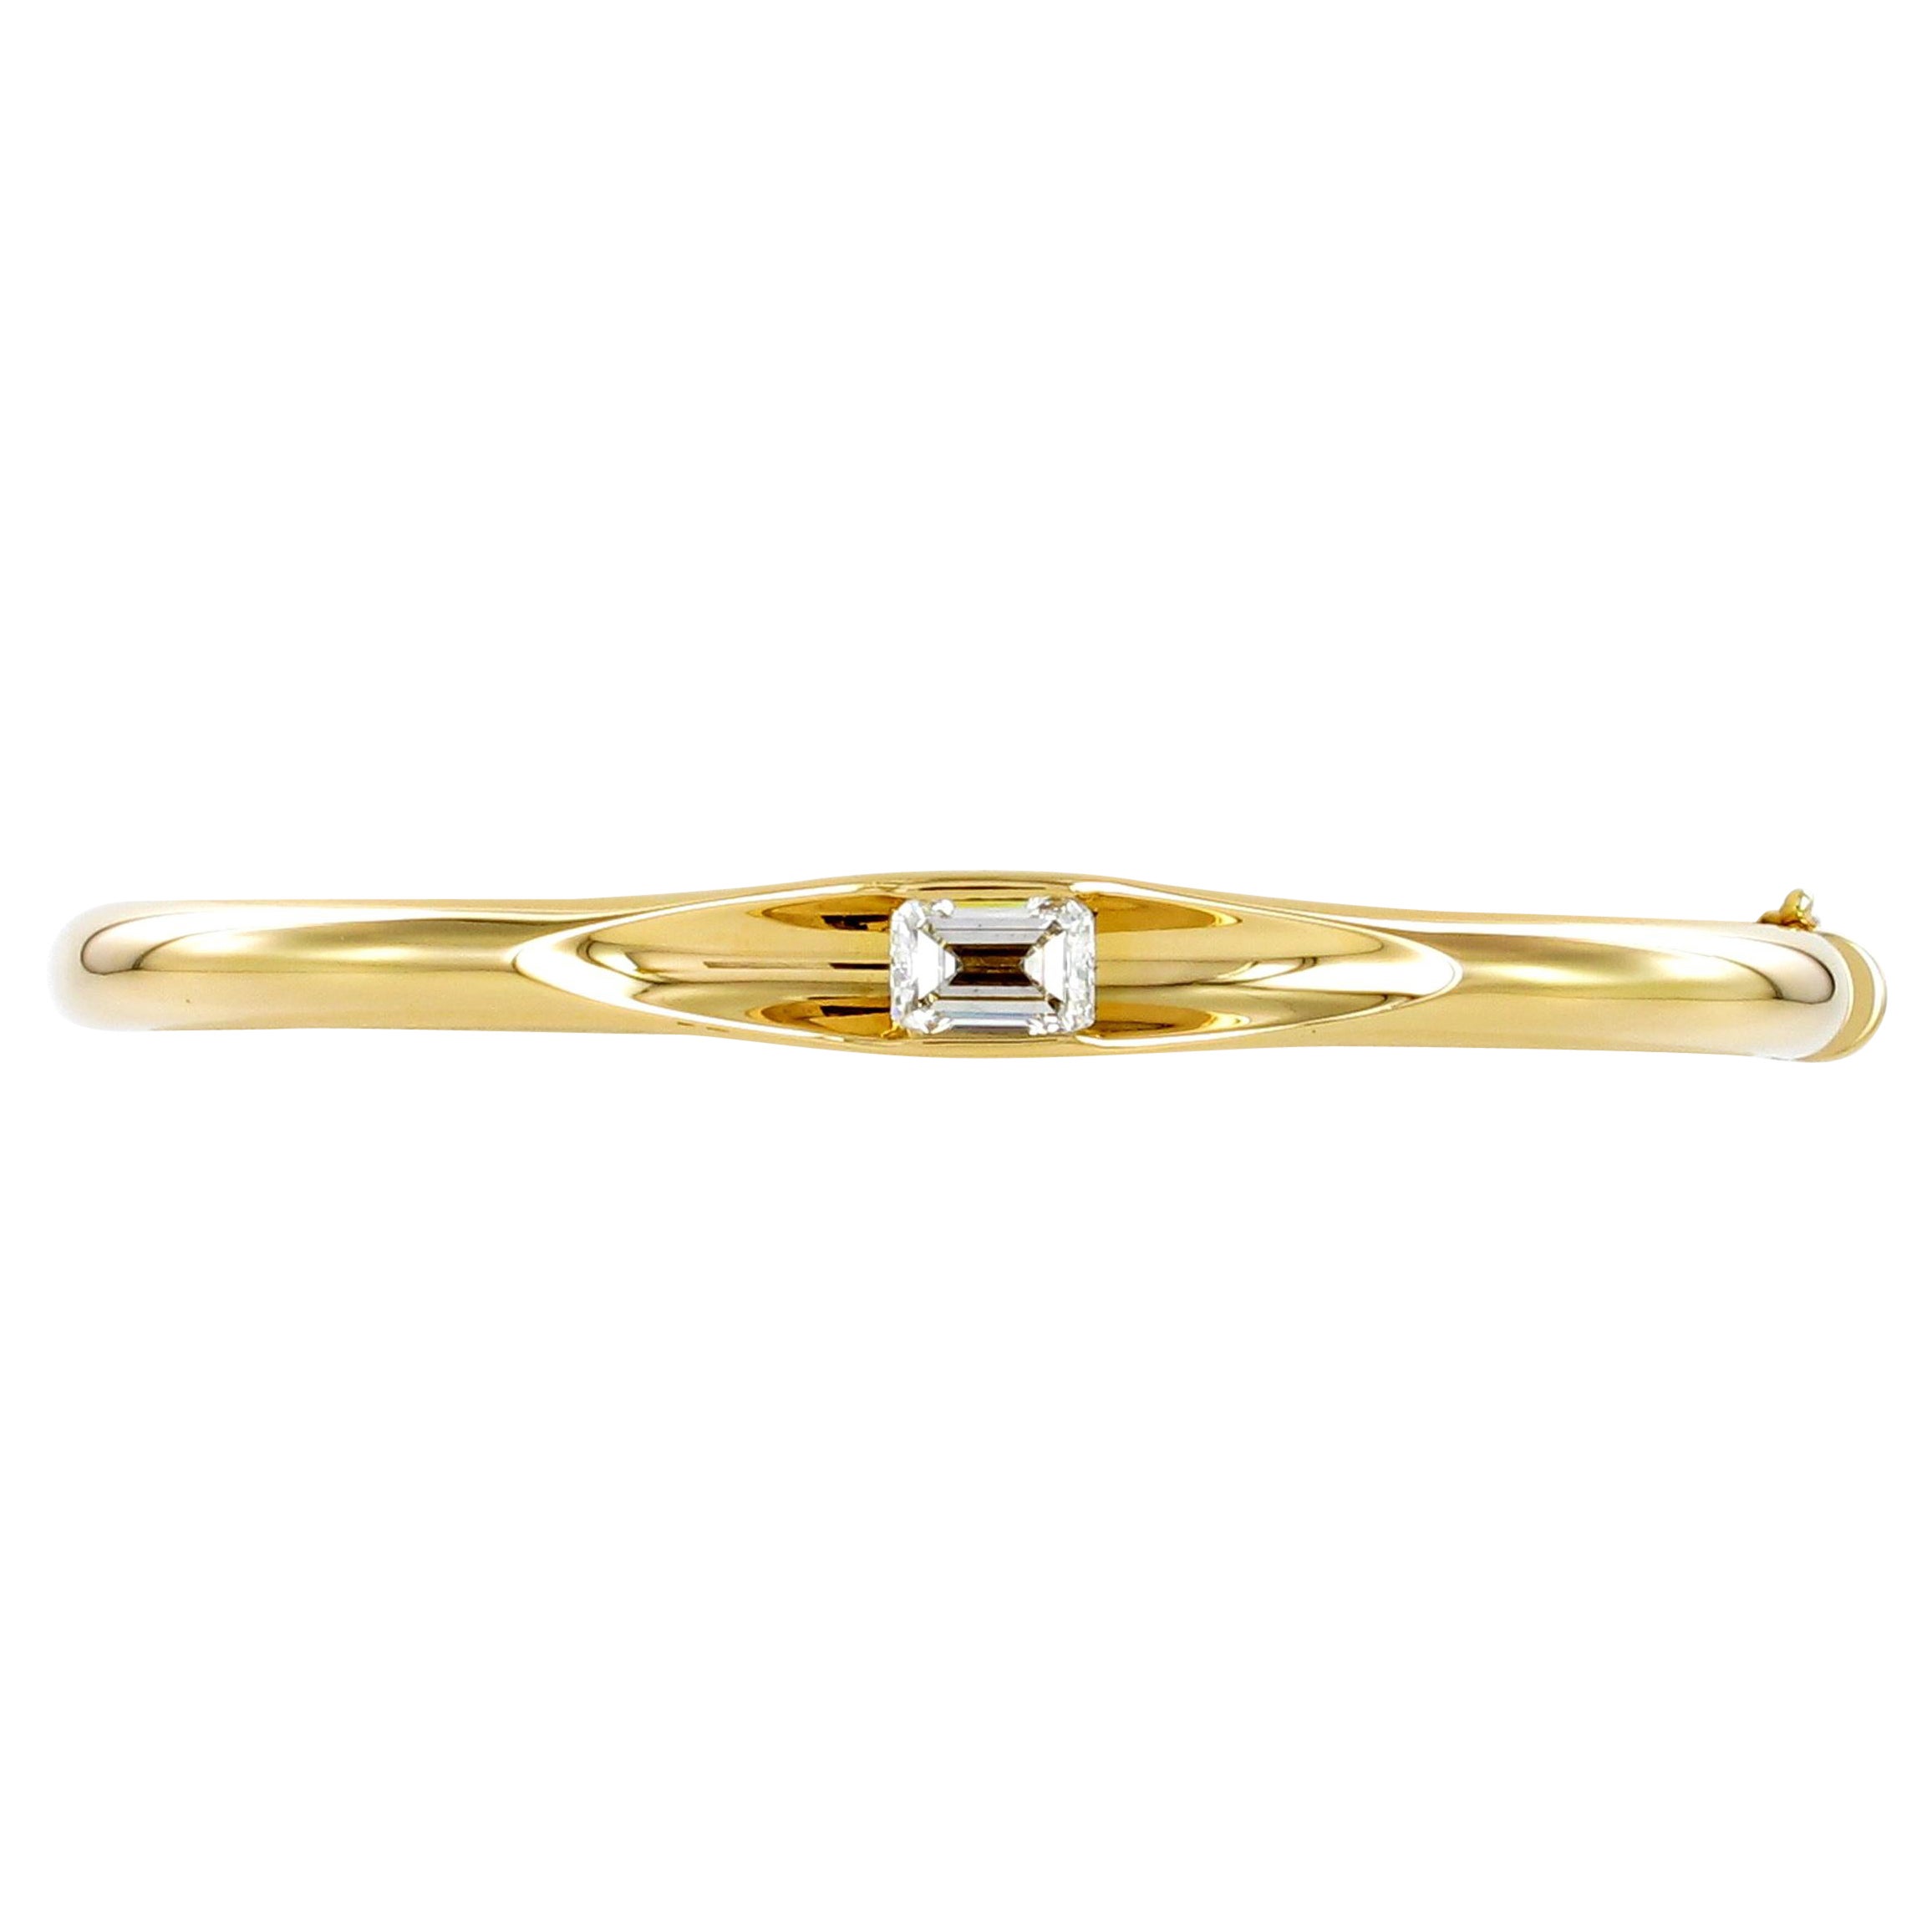 Superb 1.34 Ct Emerald-Cut Diamond Bangle by Gübelin in 18 Karat Yellow Gold For Sale